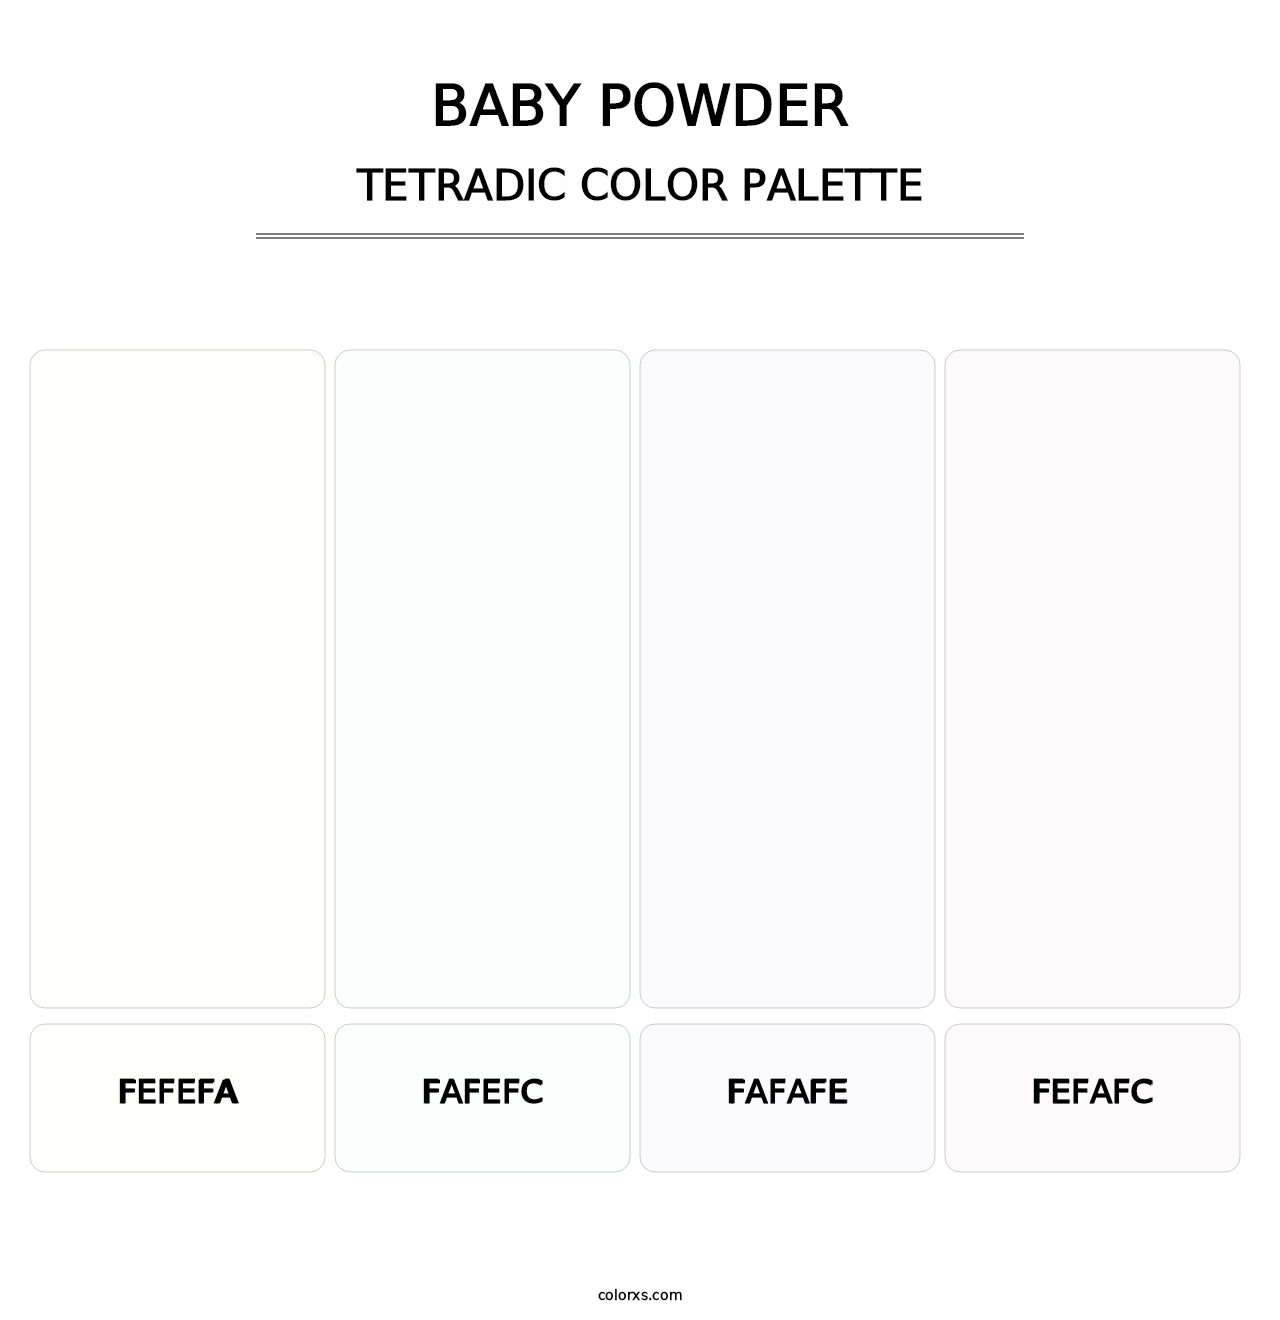 Baby Powder - Tetradic Color Palette